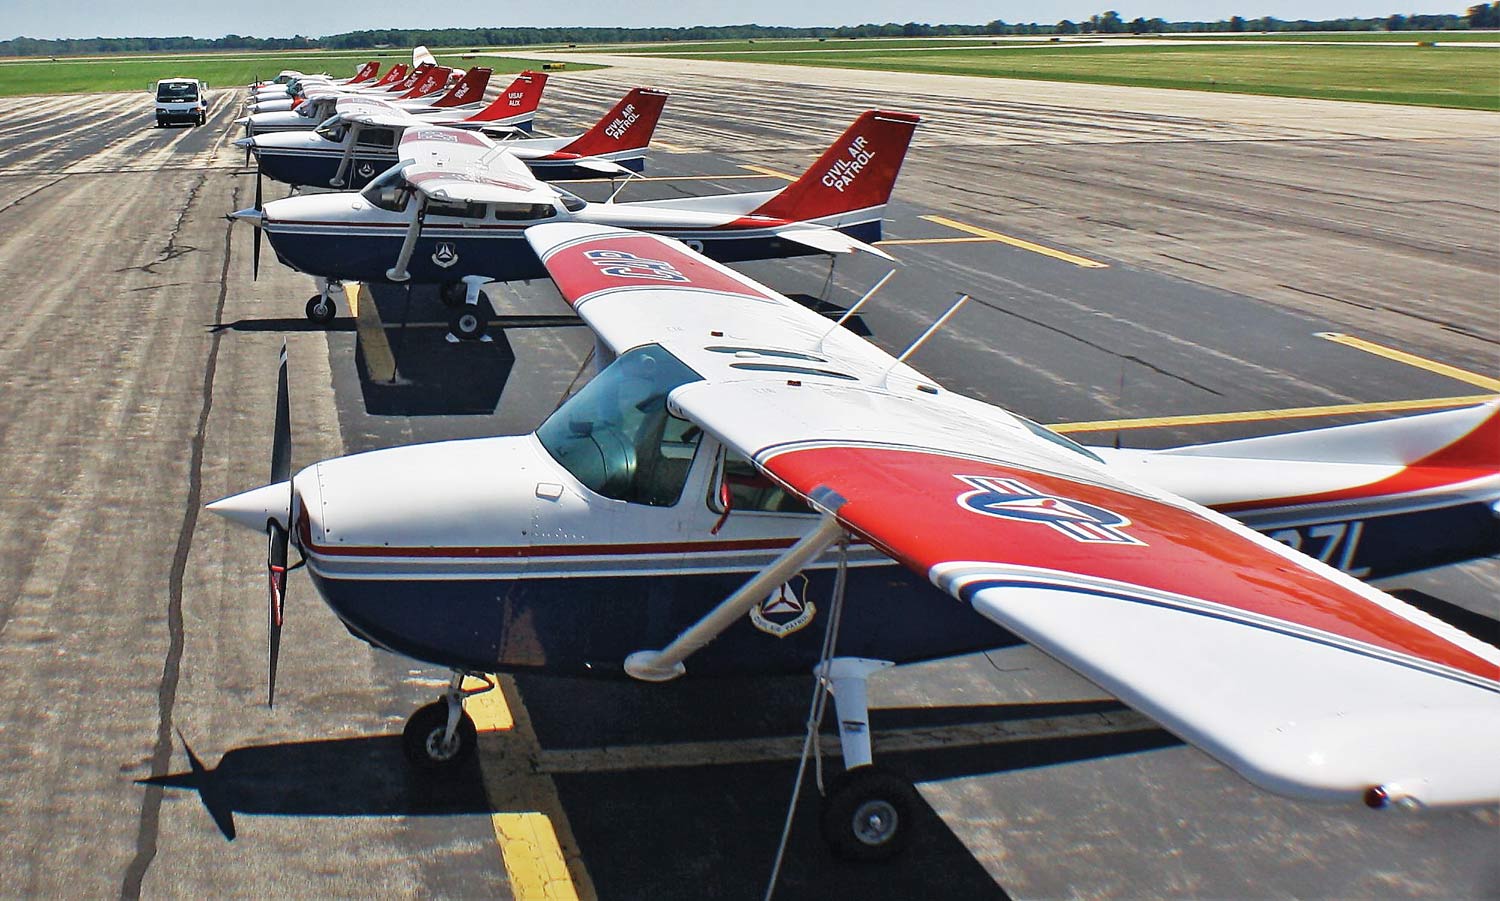 Civil Air Patrol aircraft lined up on the runway